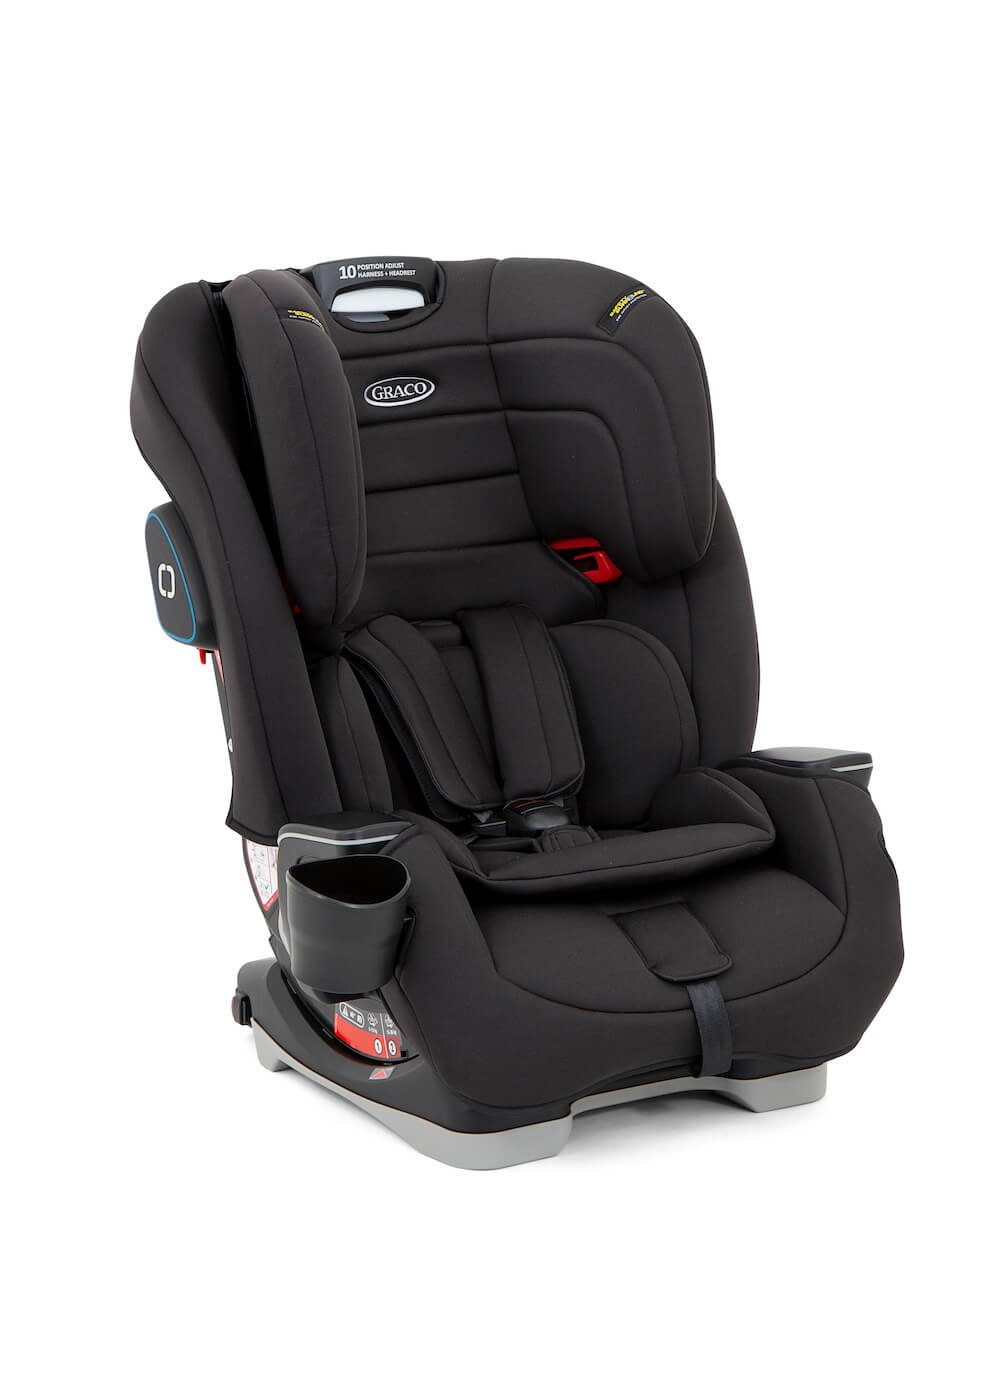 Graco Kindersitze online kaufen » Graco Kinderautositze | OTTO